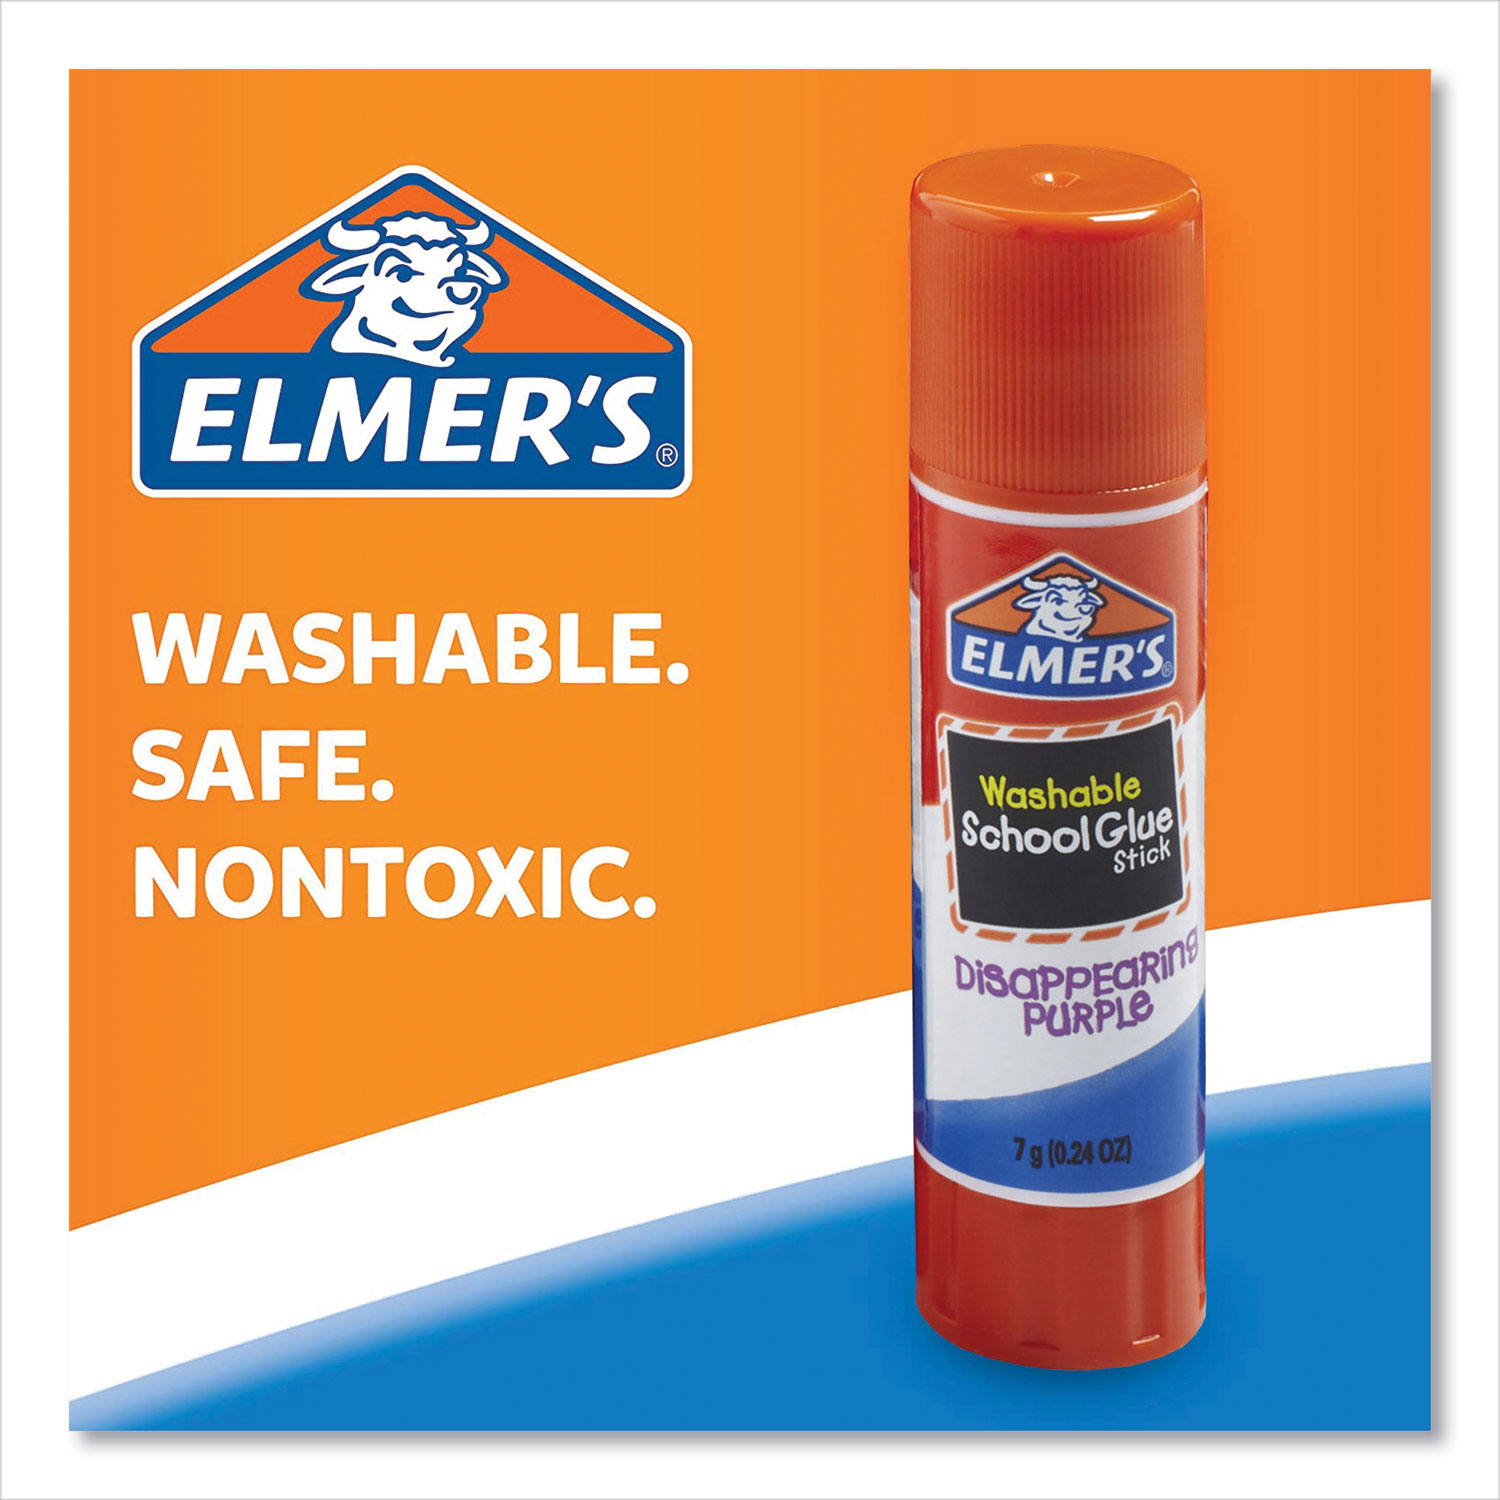 Buy Elmer's Washable Disappearing Purple School Glue Stick 0.21 Oz.